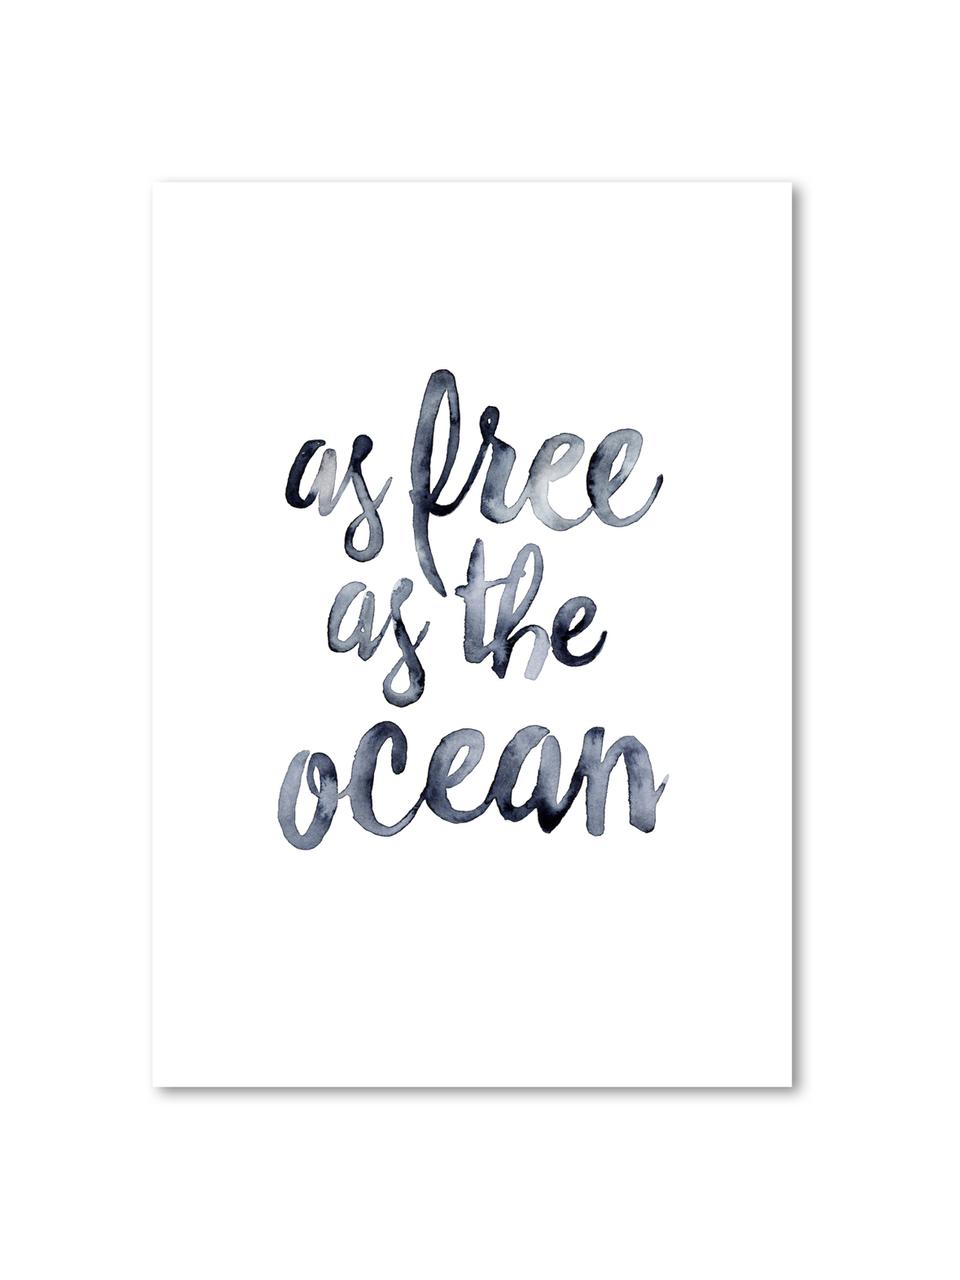 Plakát As Free As The Ocean, Digitální tisk na papír, 200 g/m², Tmavě modrá, bílá, Š 21 cm, V 30 cm